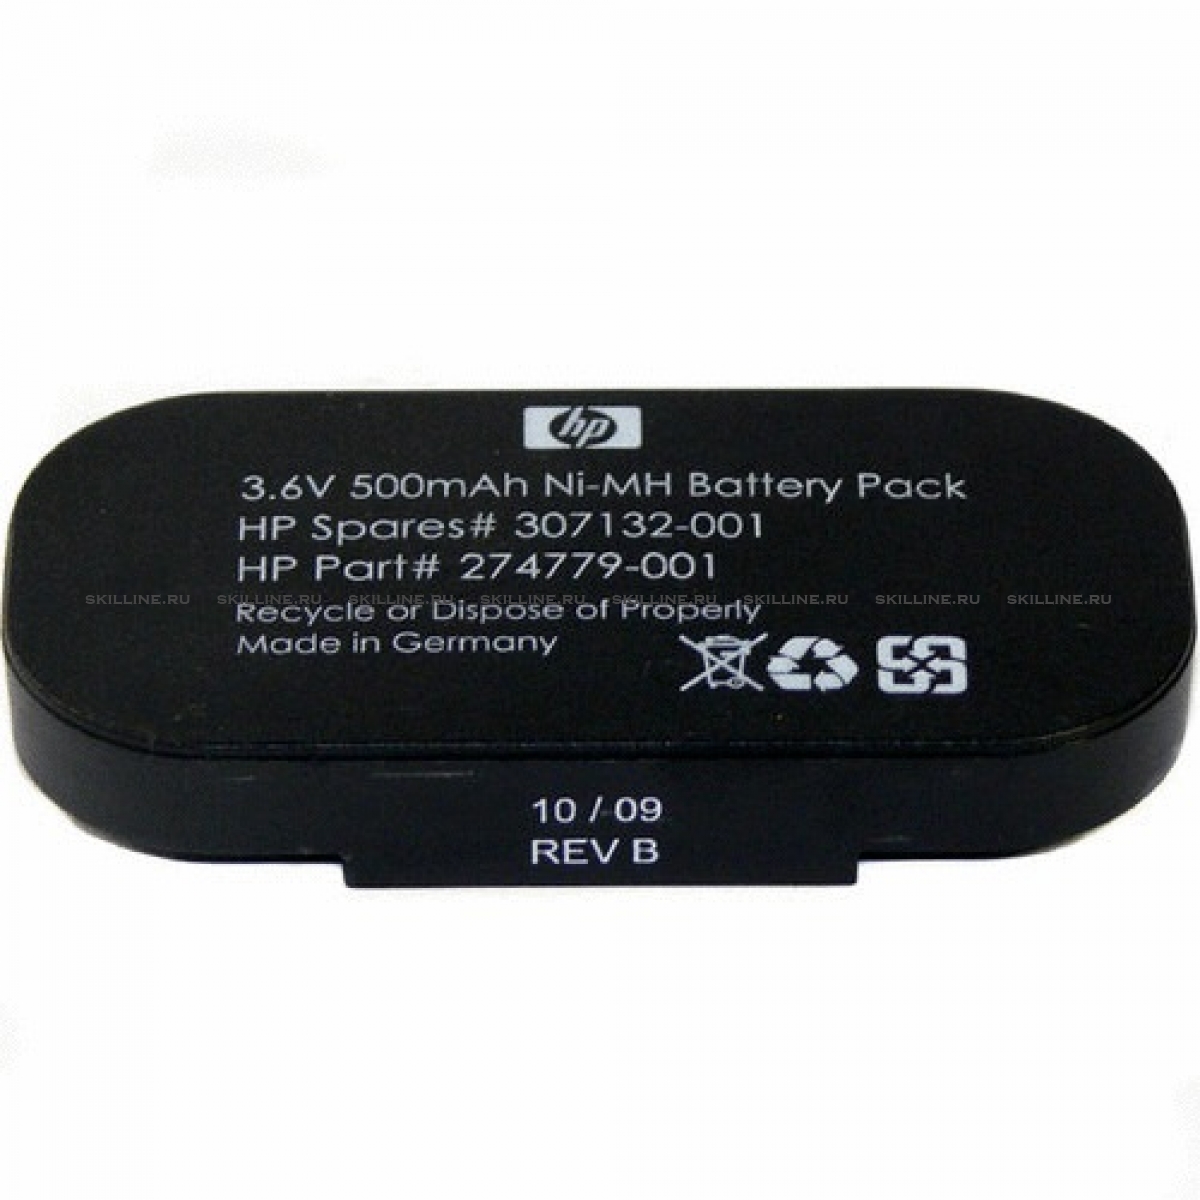 Battery pack 6. DL 380 6v аккумулятор. Battery Pack оригинал.